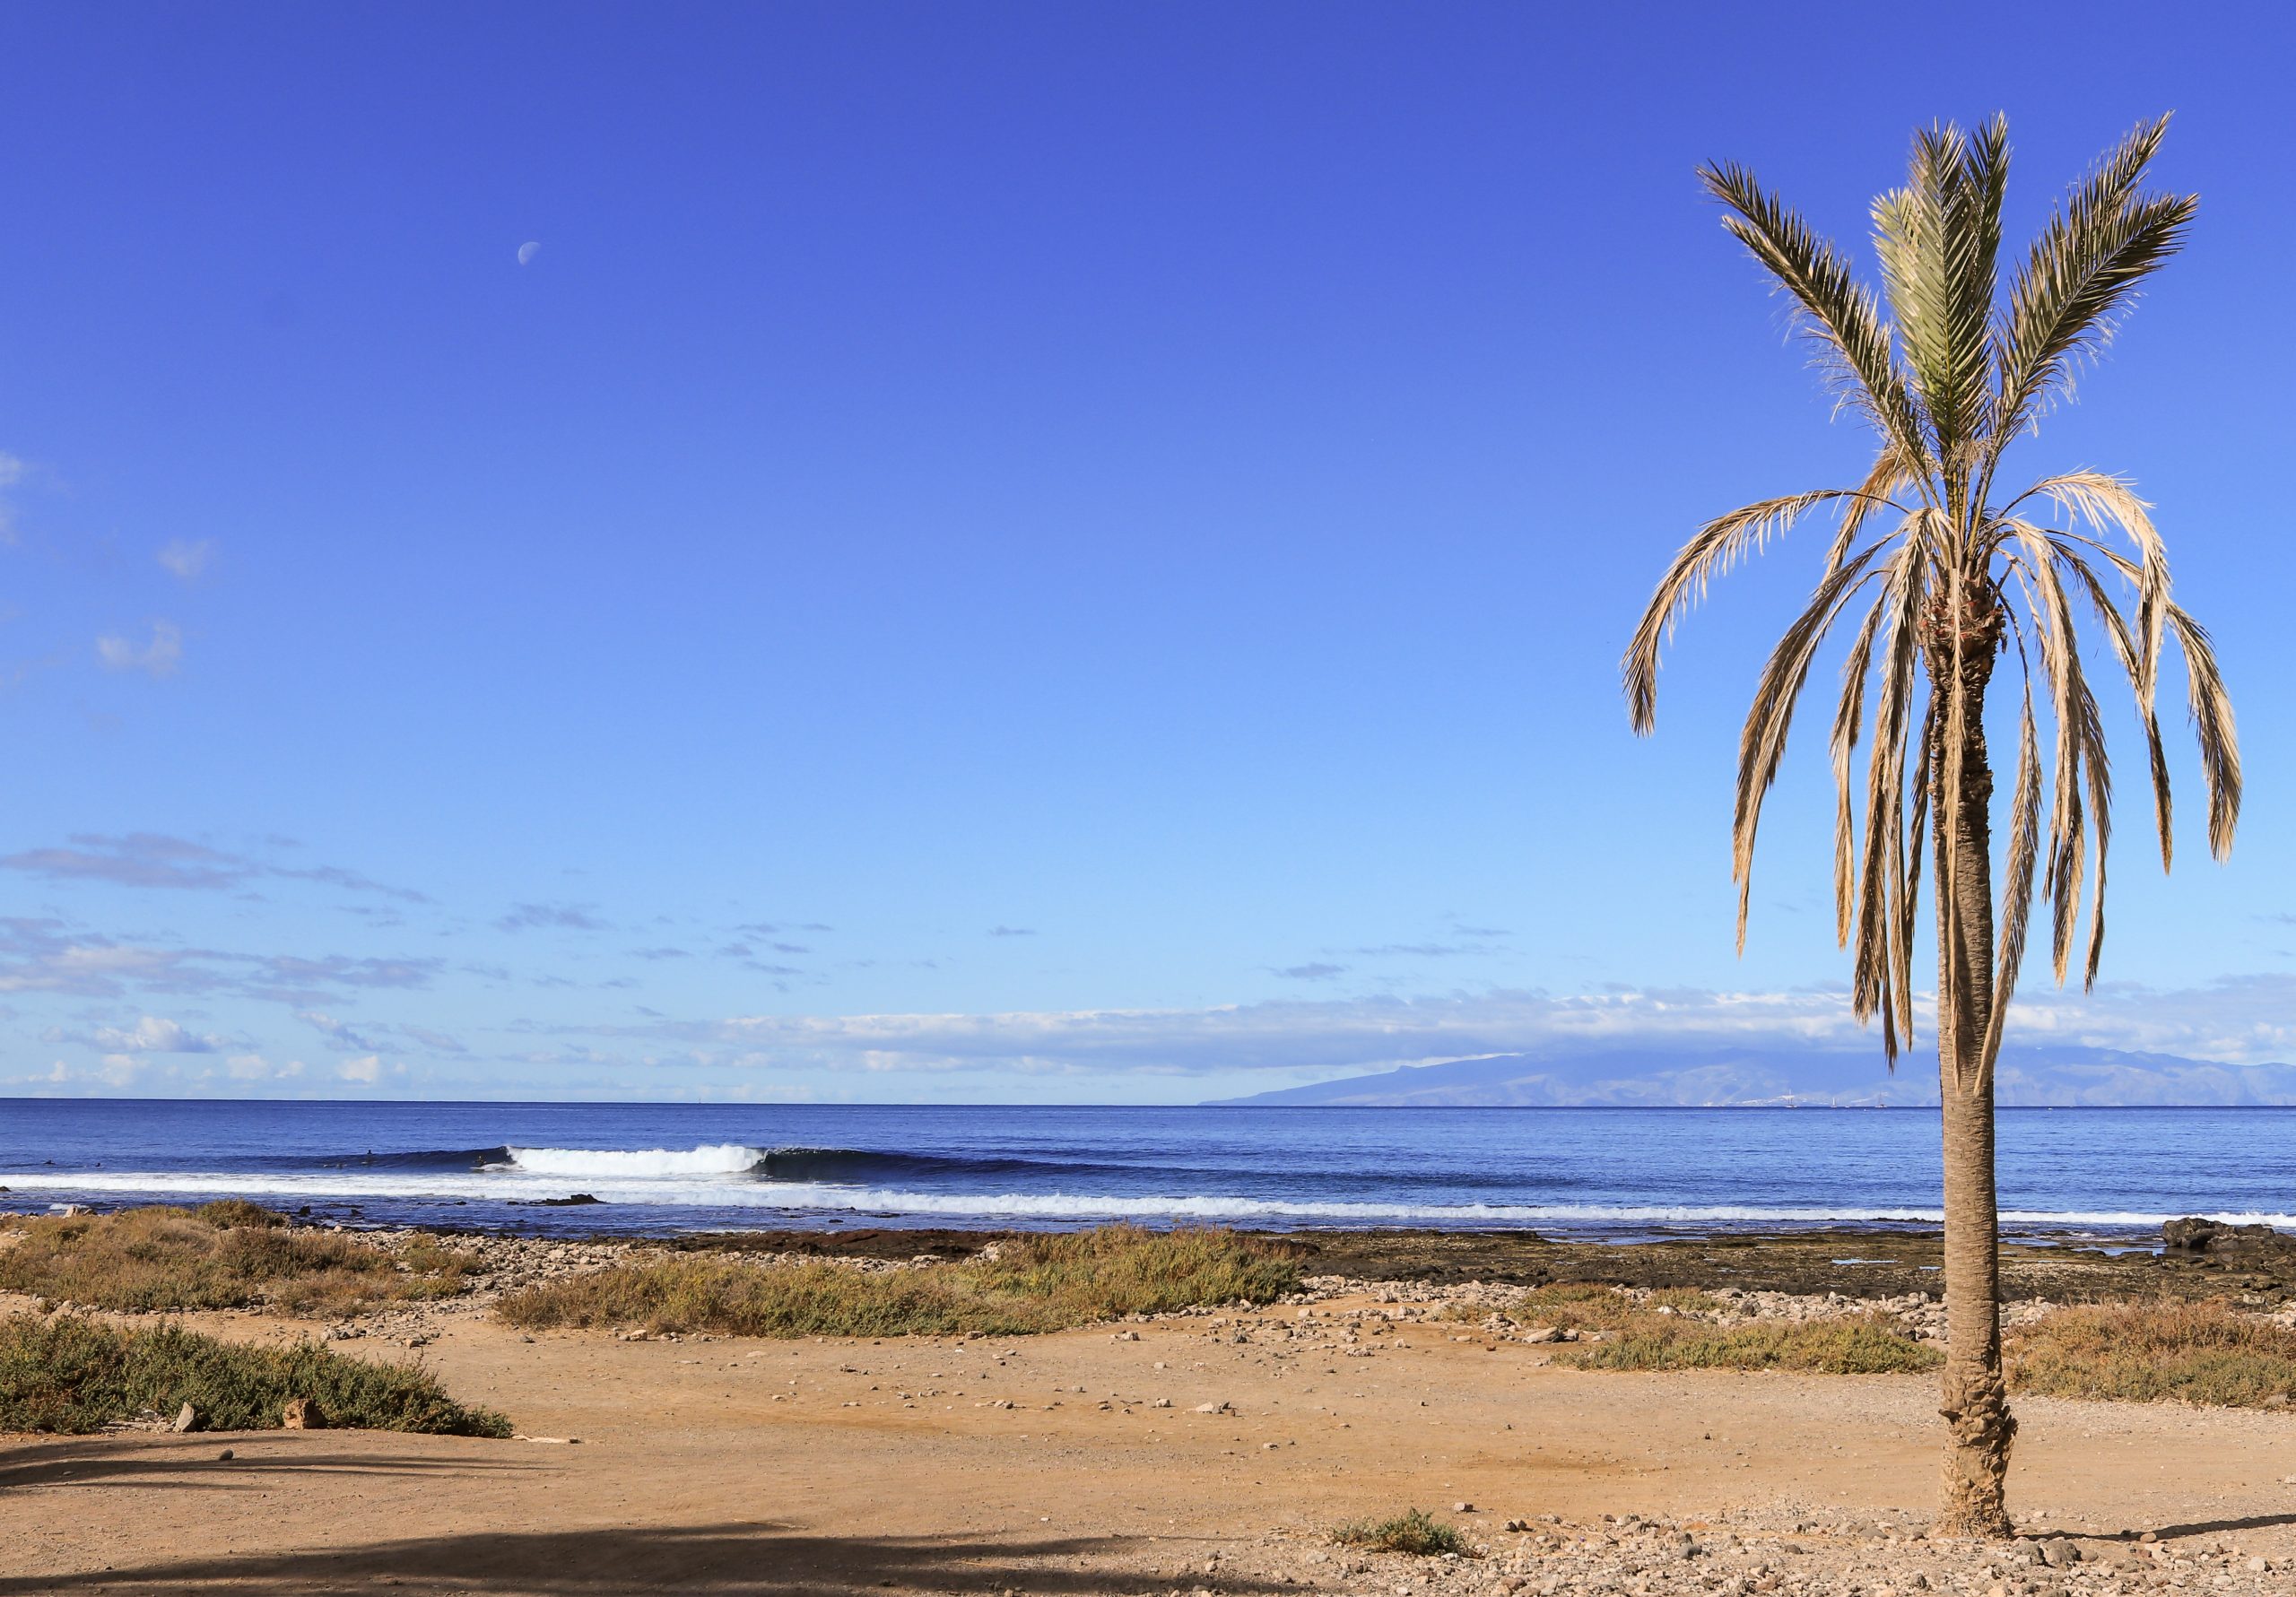 Playa las Américas Surf Spot in Tenerife